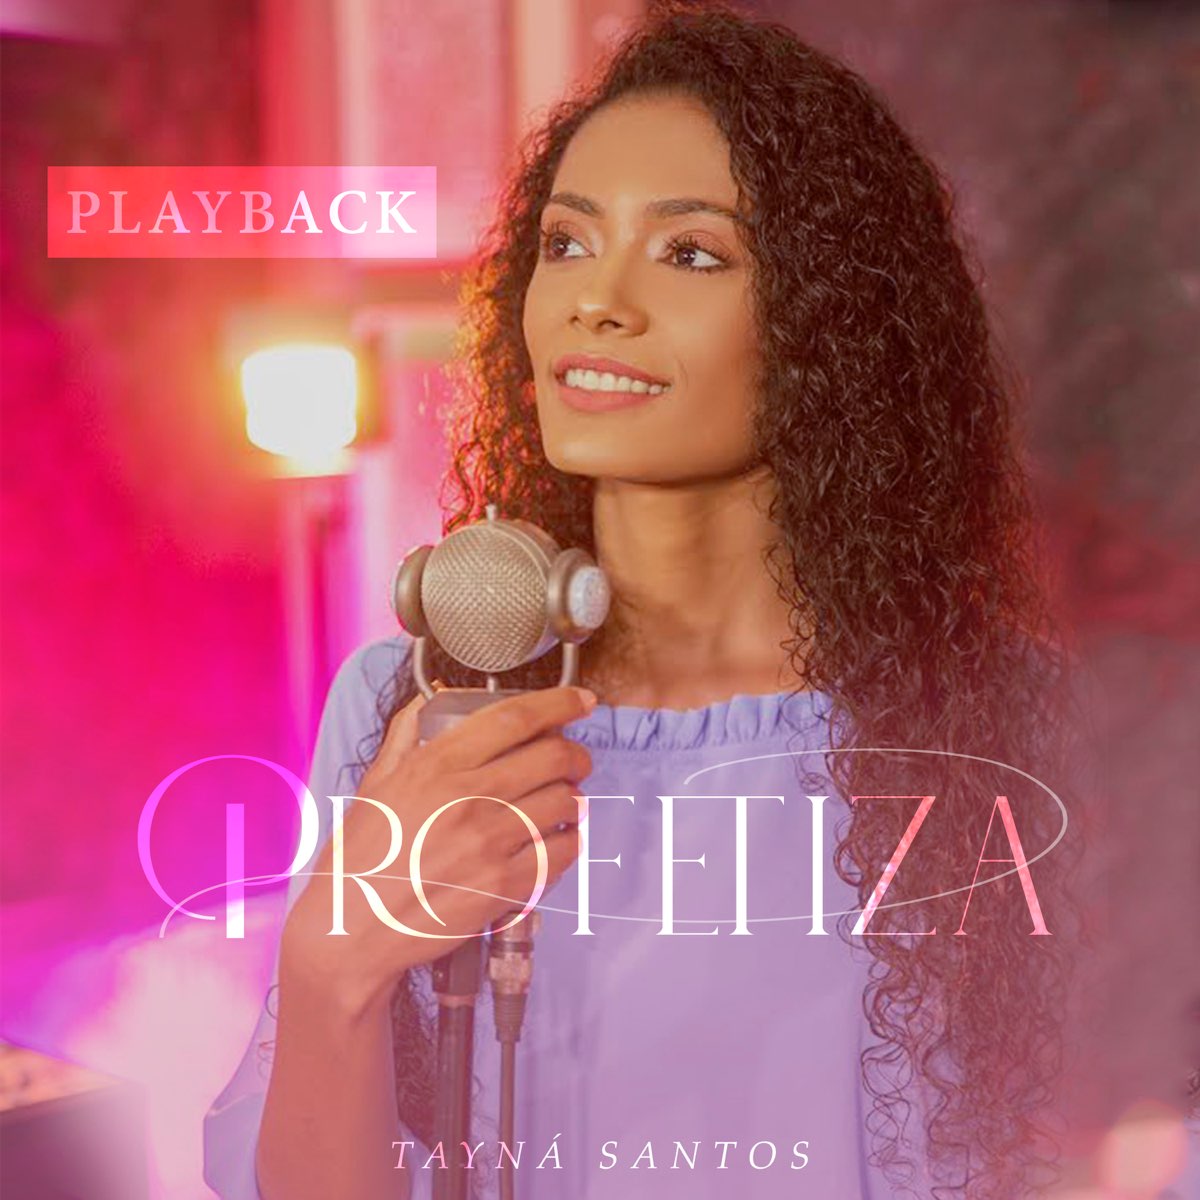 ‎Profetiza (Playback) - Single by Tayná Santos on Apple Music